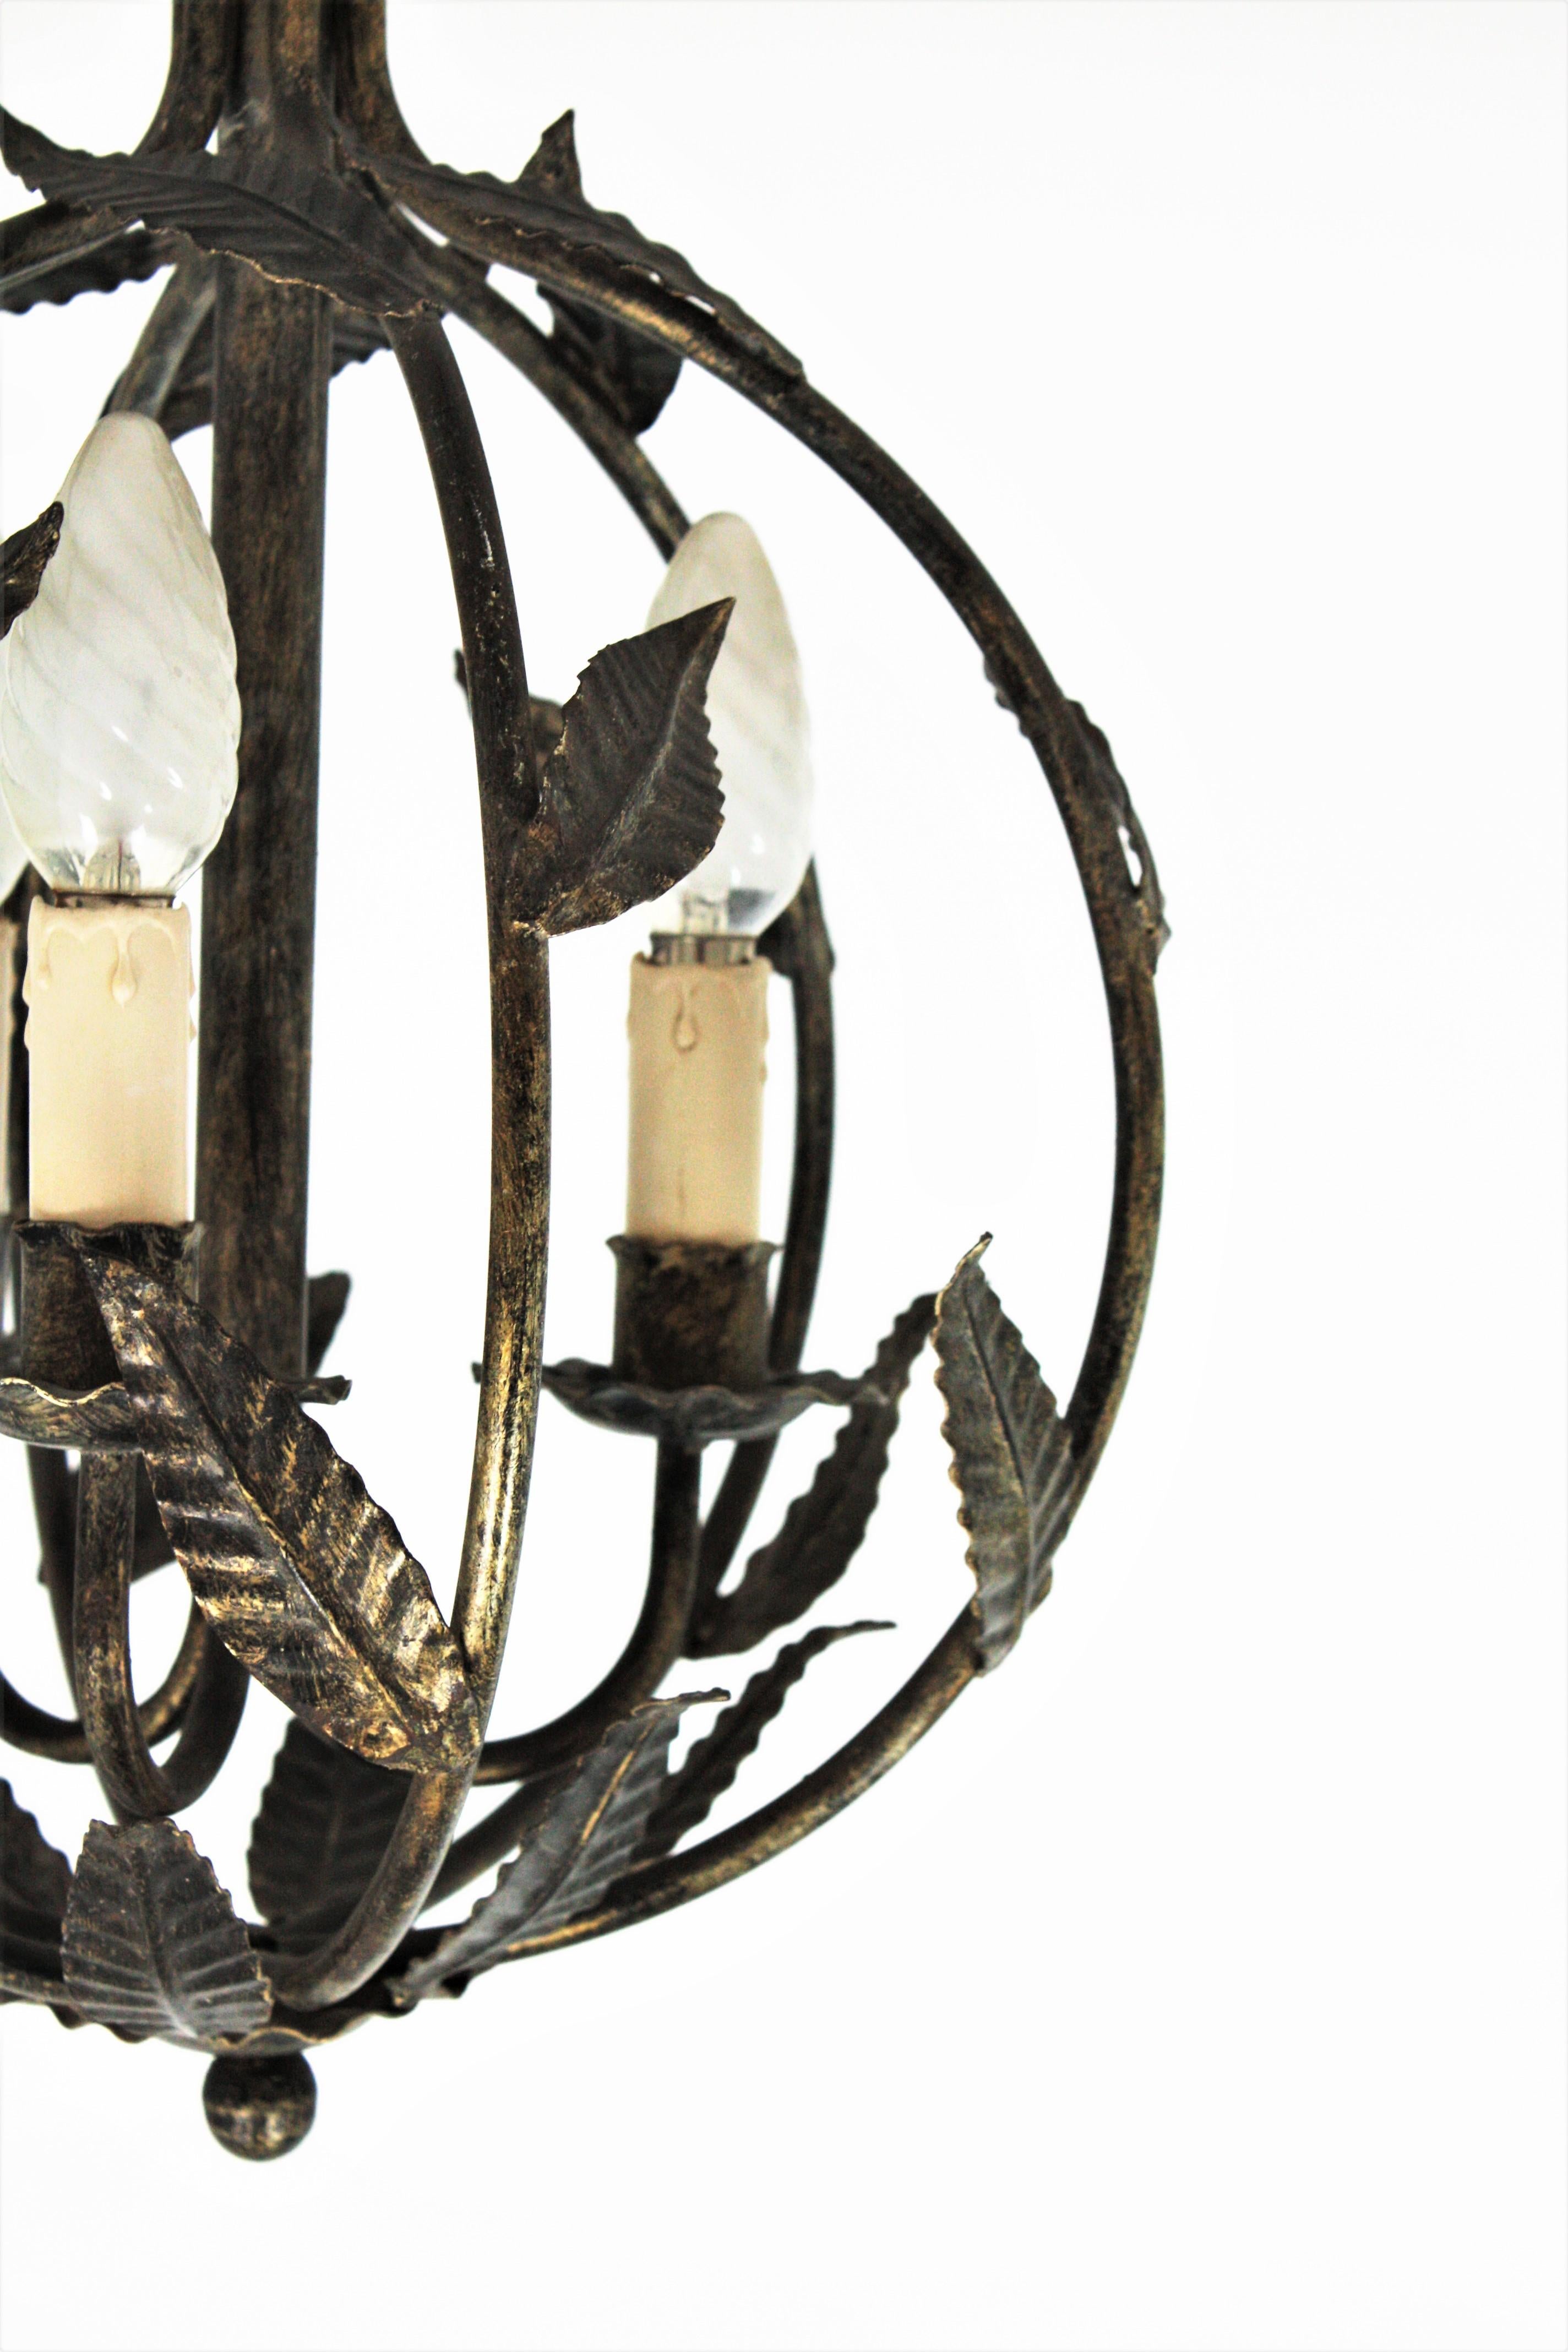 20th Century French Parcel-Gilt Wrought Iron Globe Pendant Light / Lantern with Leaves Design